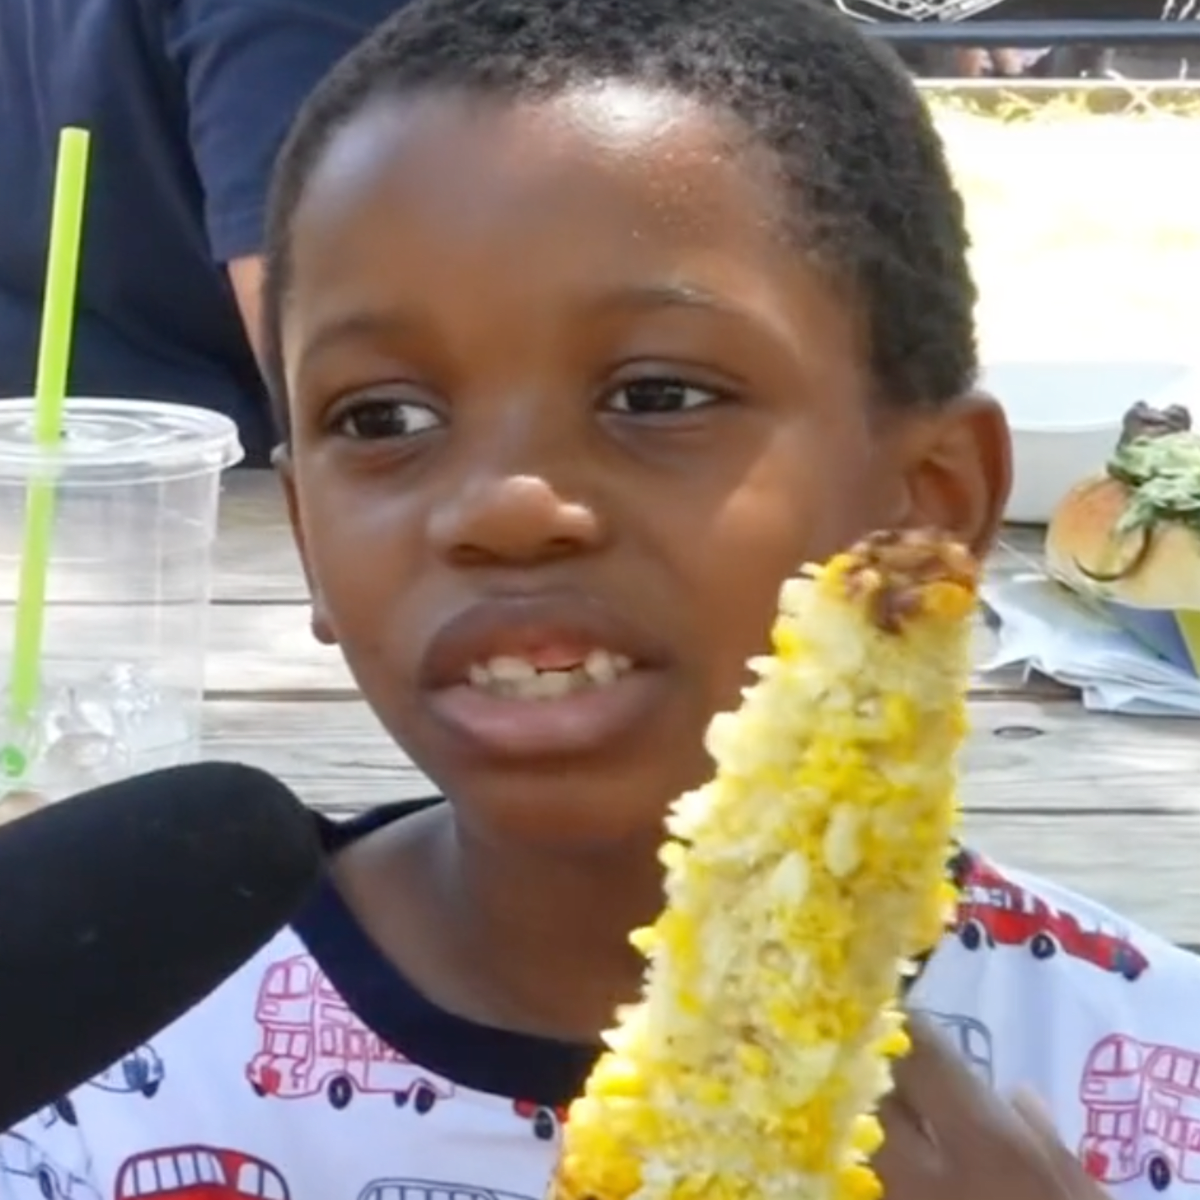 Corn kidz. OMG its Corn. Corn Wave группа лицо. Corn Kids 64. Corn Kidz 64.